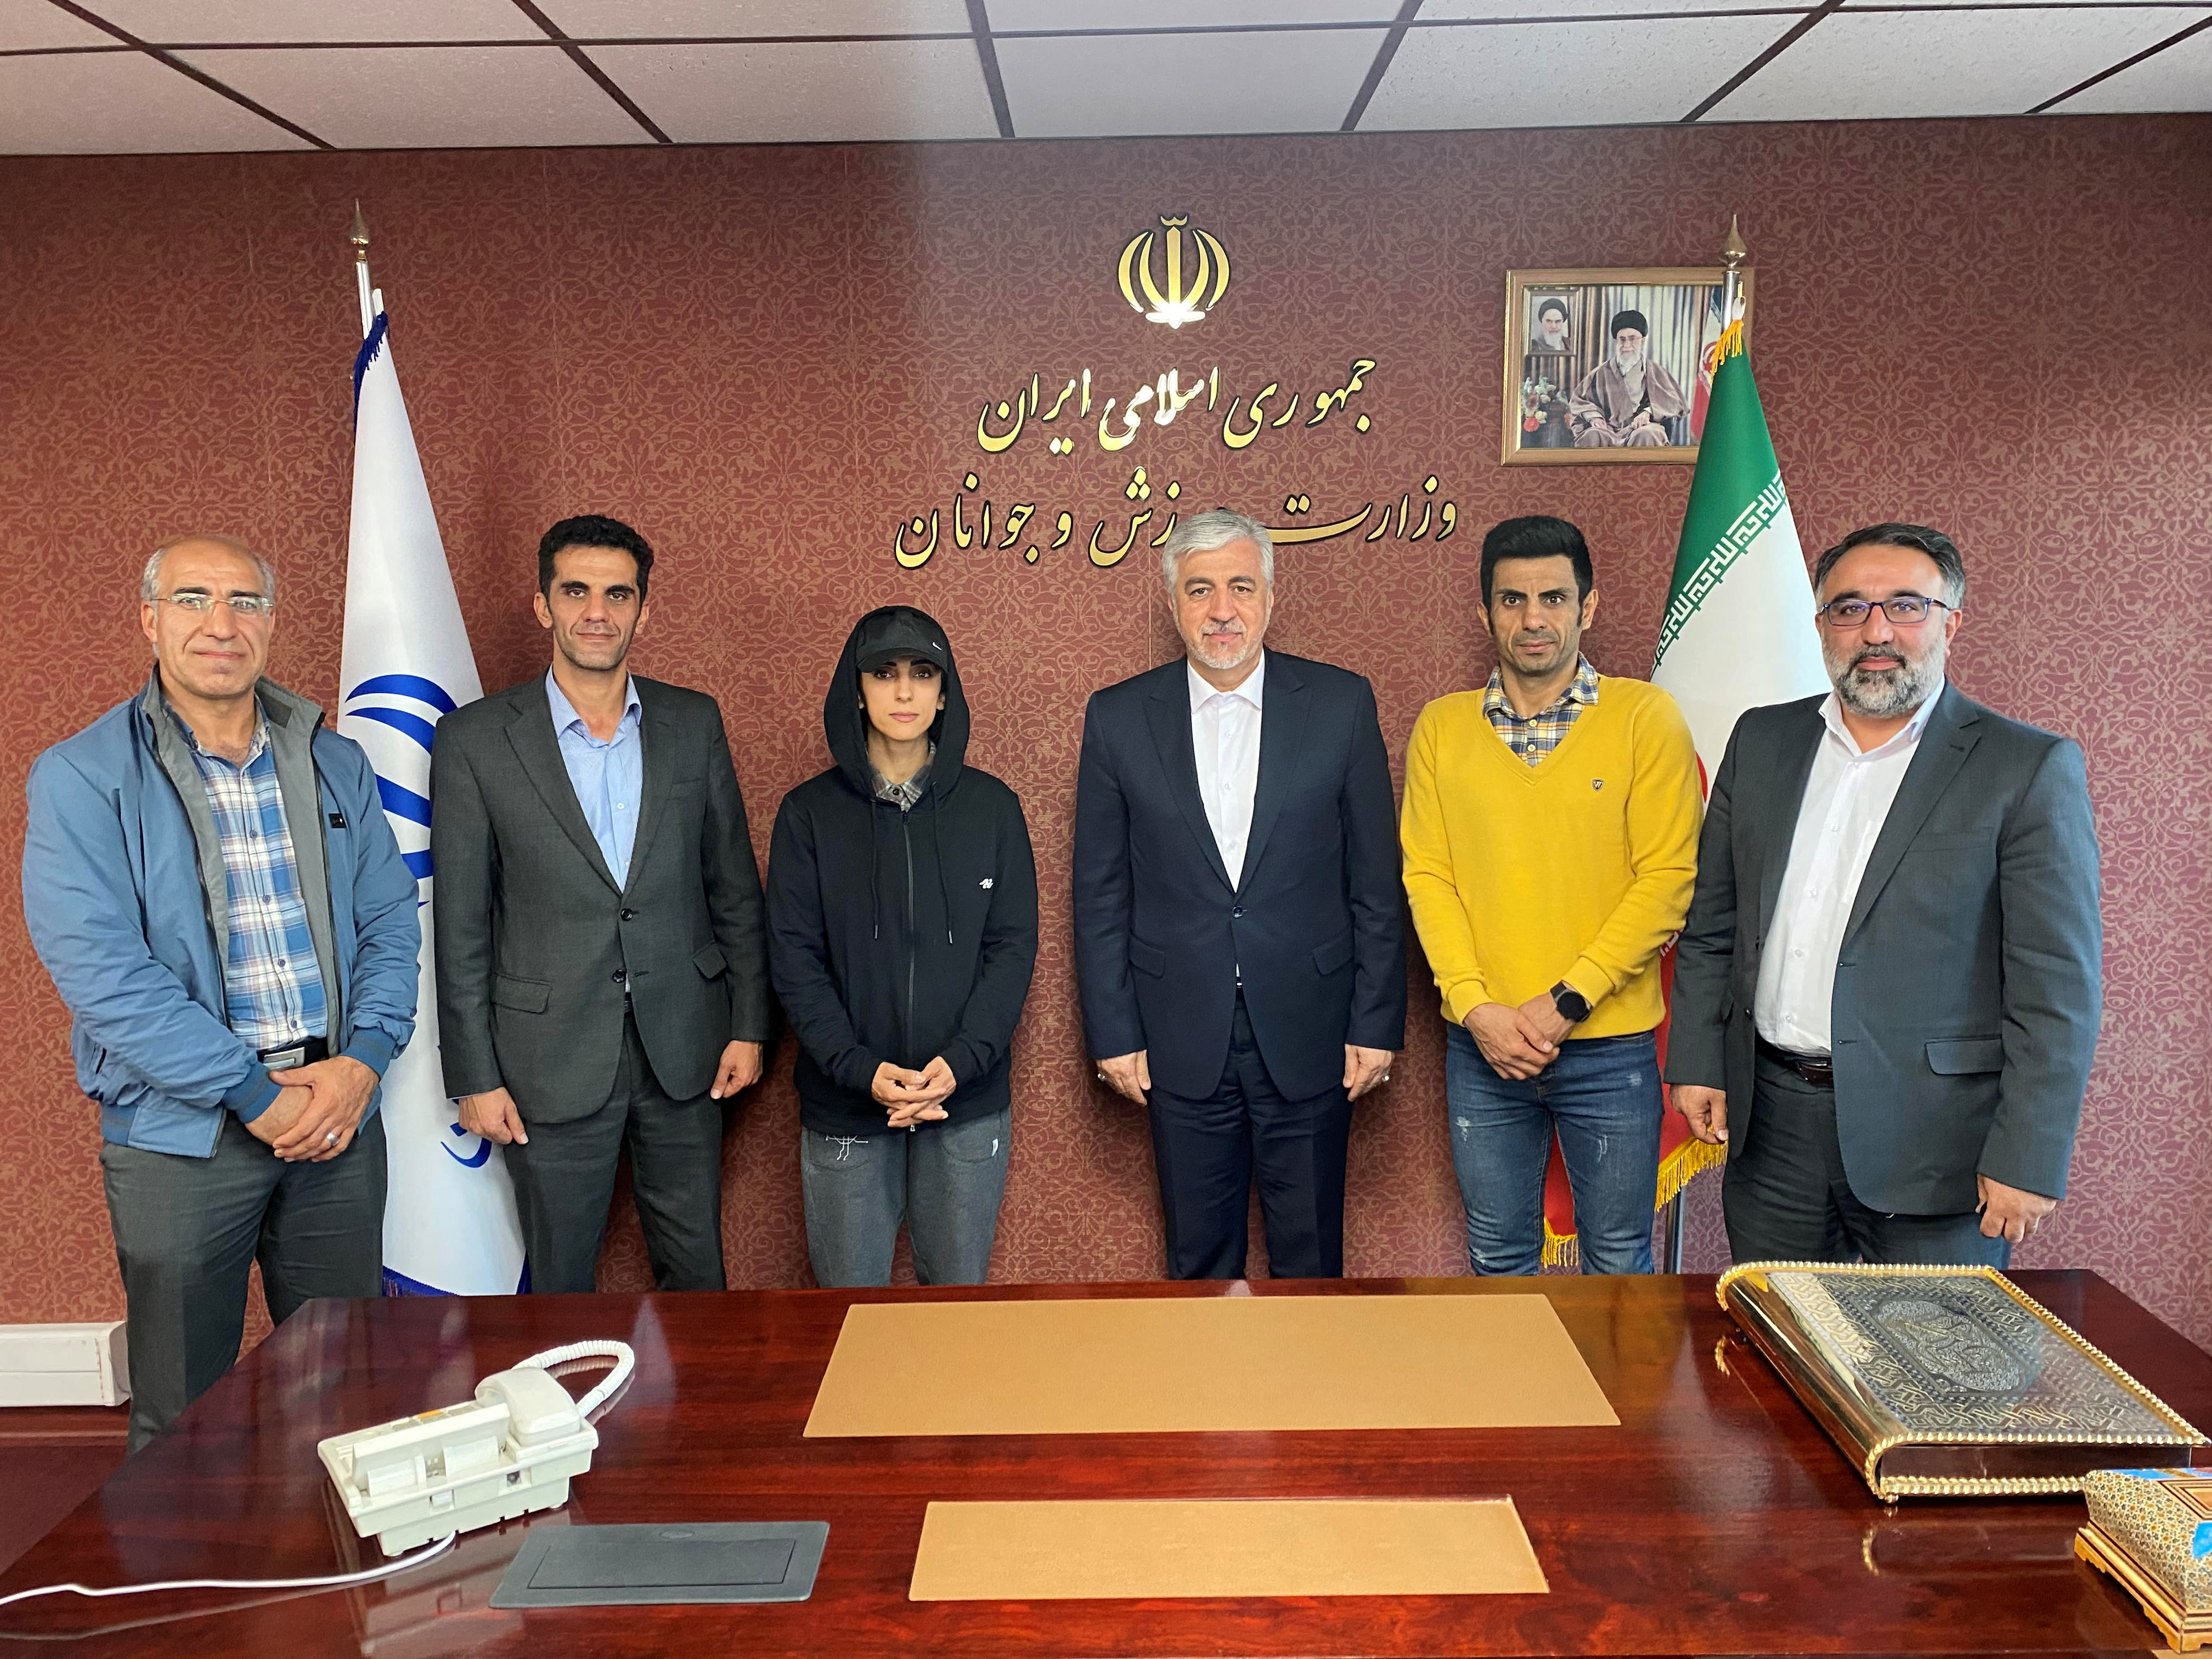 Iran's Minister of Youth Affairs and Sports Hamid Sajjadi meets with Iranian climber Elnaz Rekabi in Tehran